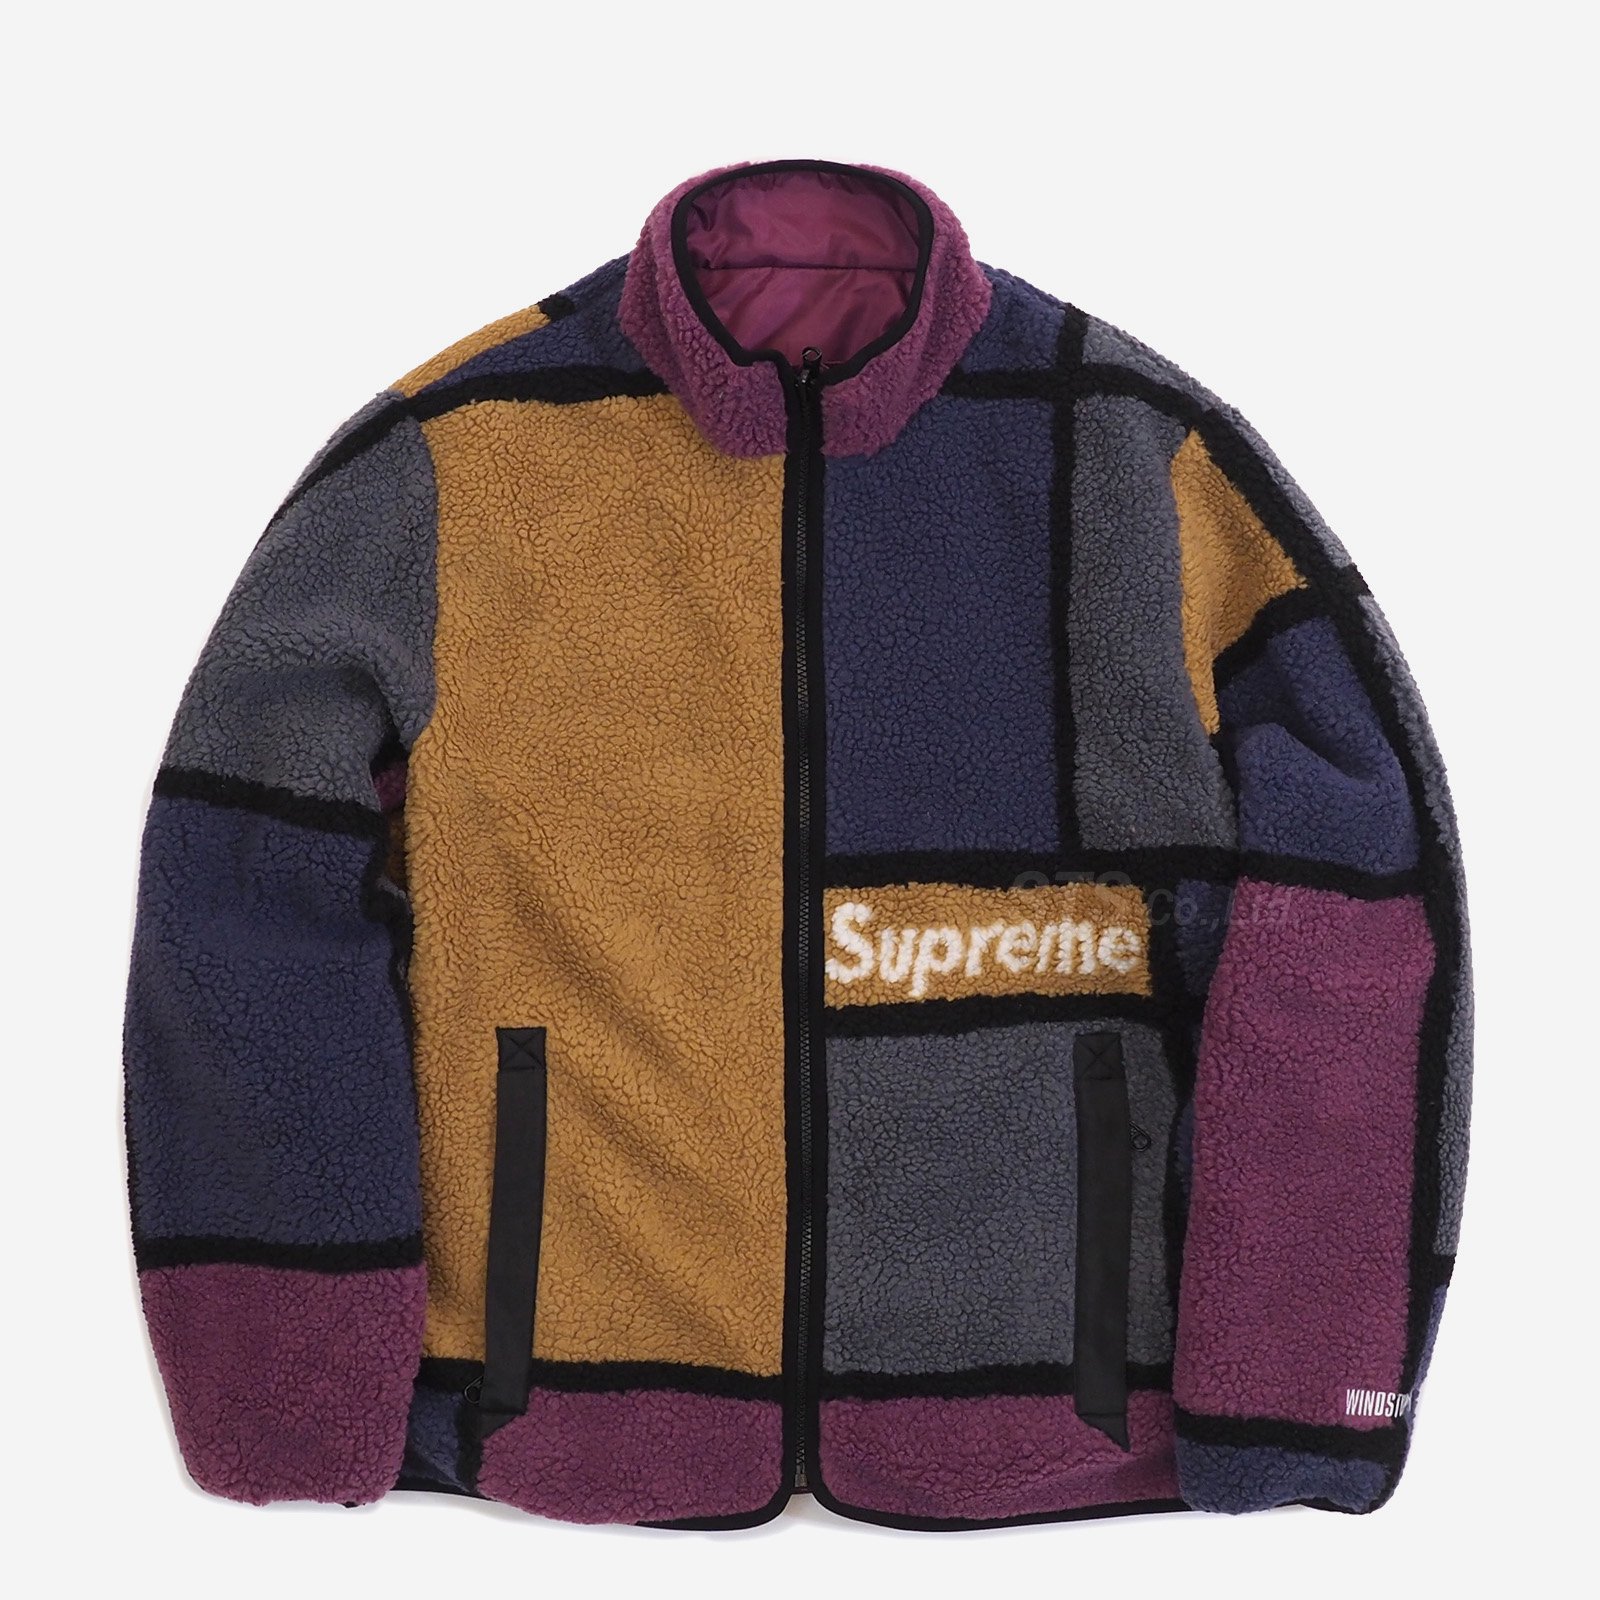 XL★Reversible Colorblocked Fleece Jacket